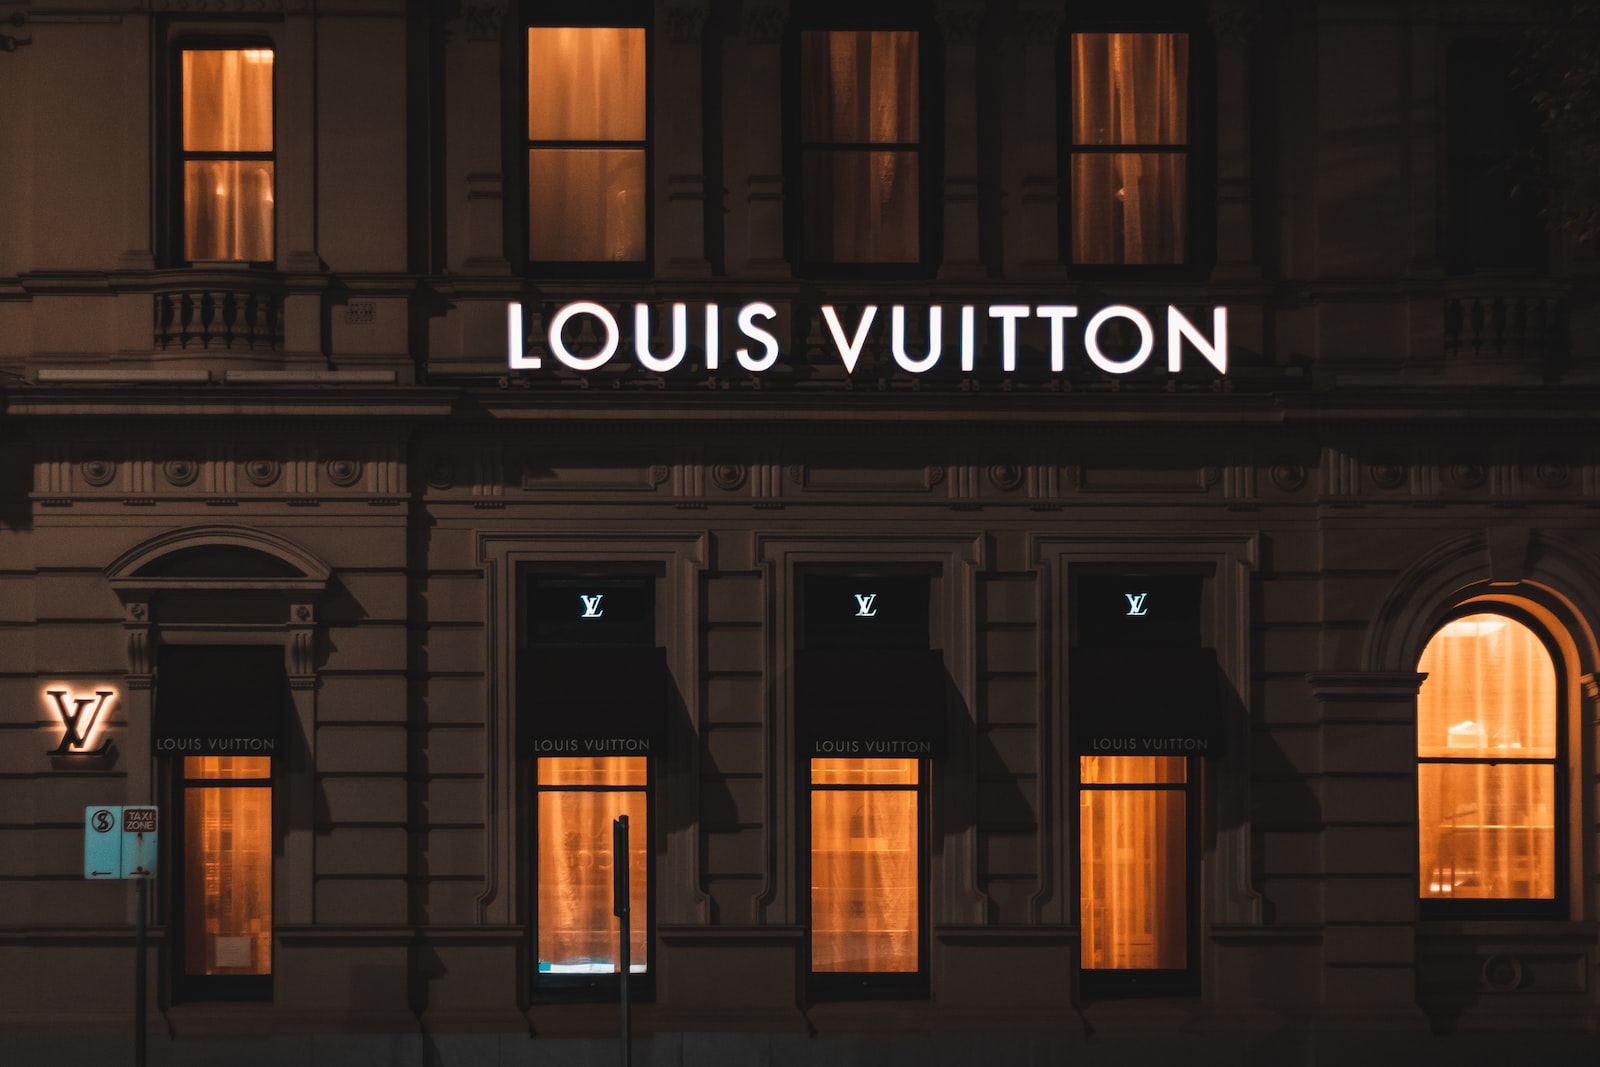 Joan Mitchell Foundation warns Louis Vuitton